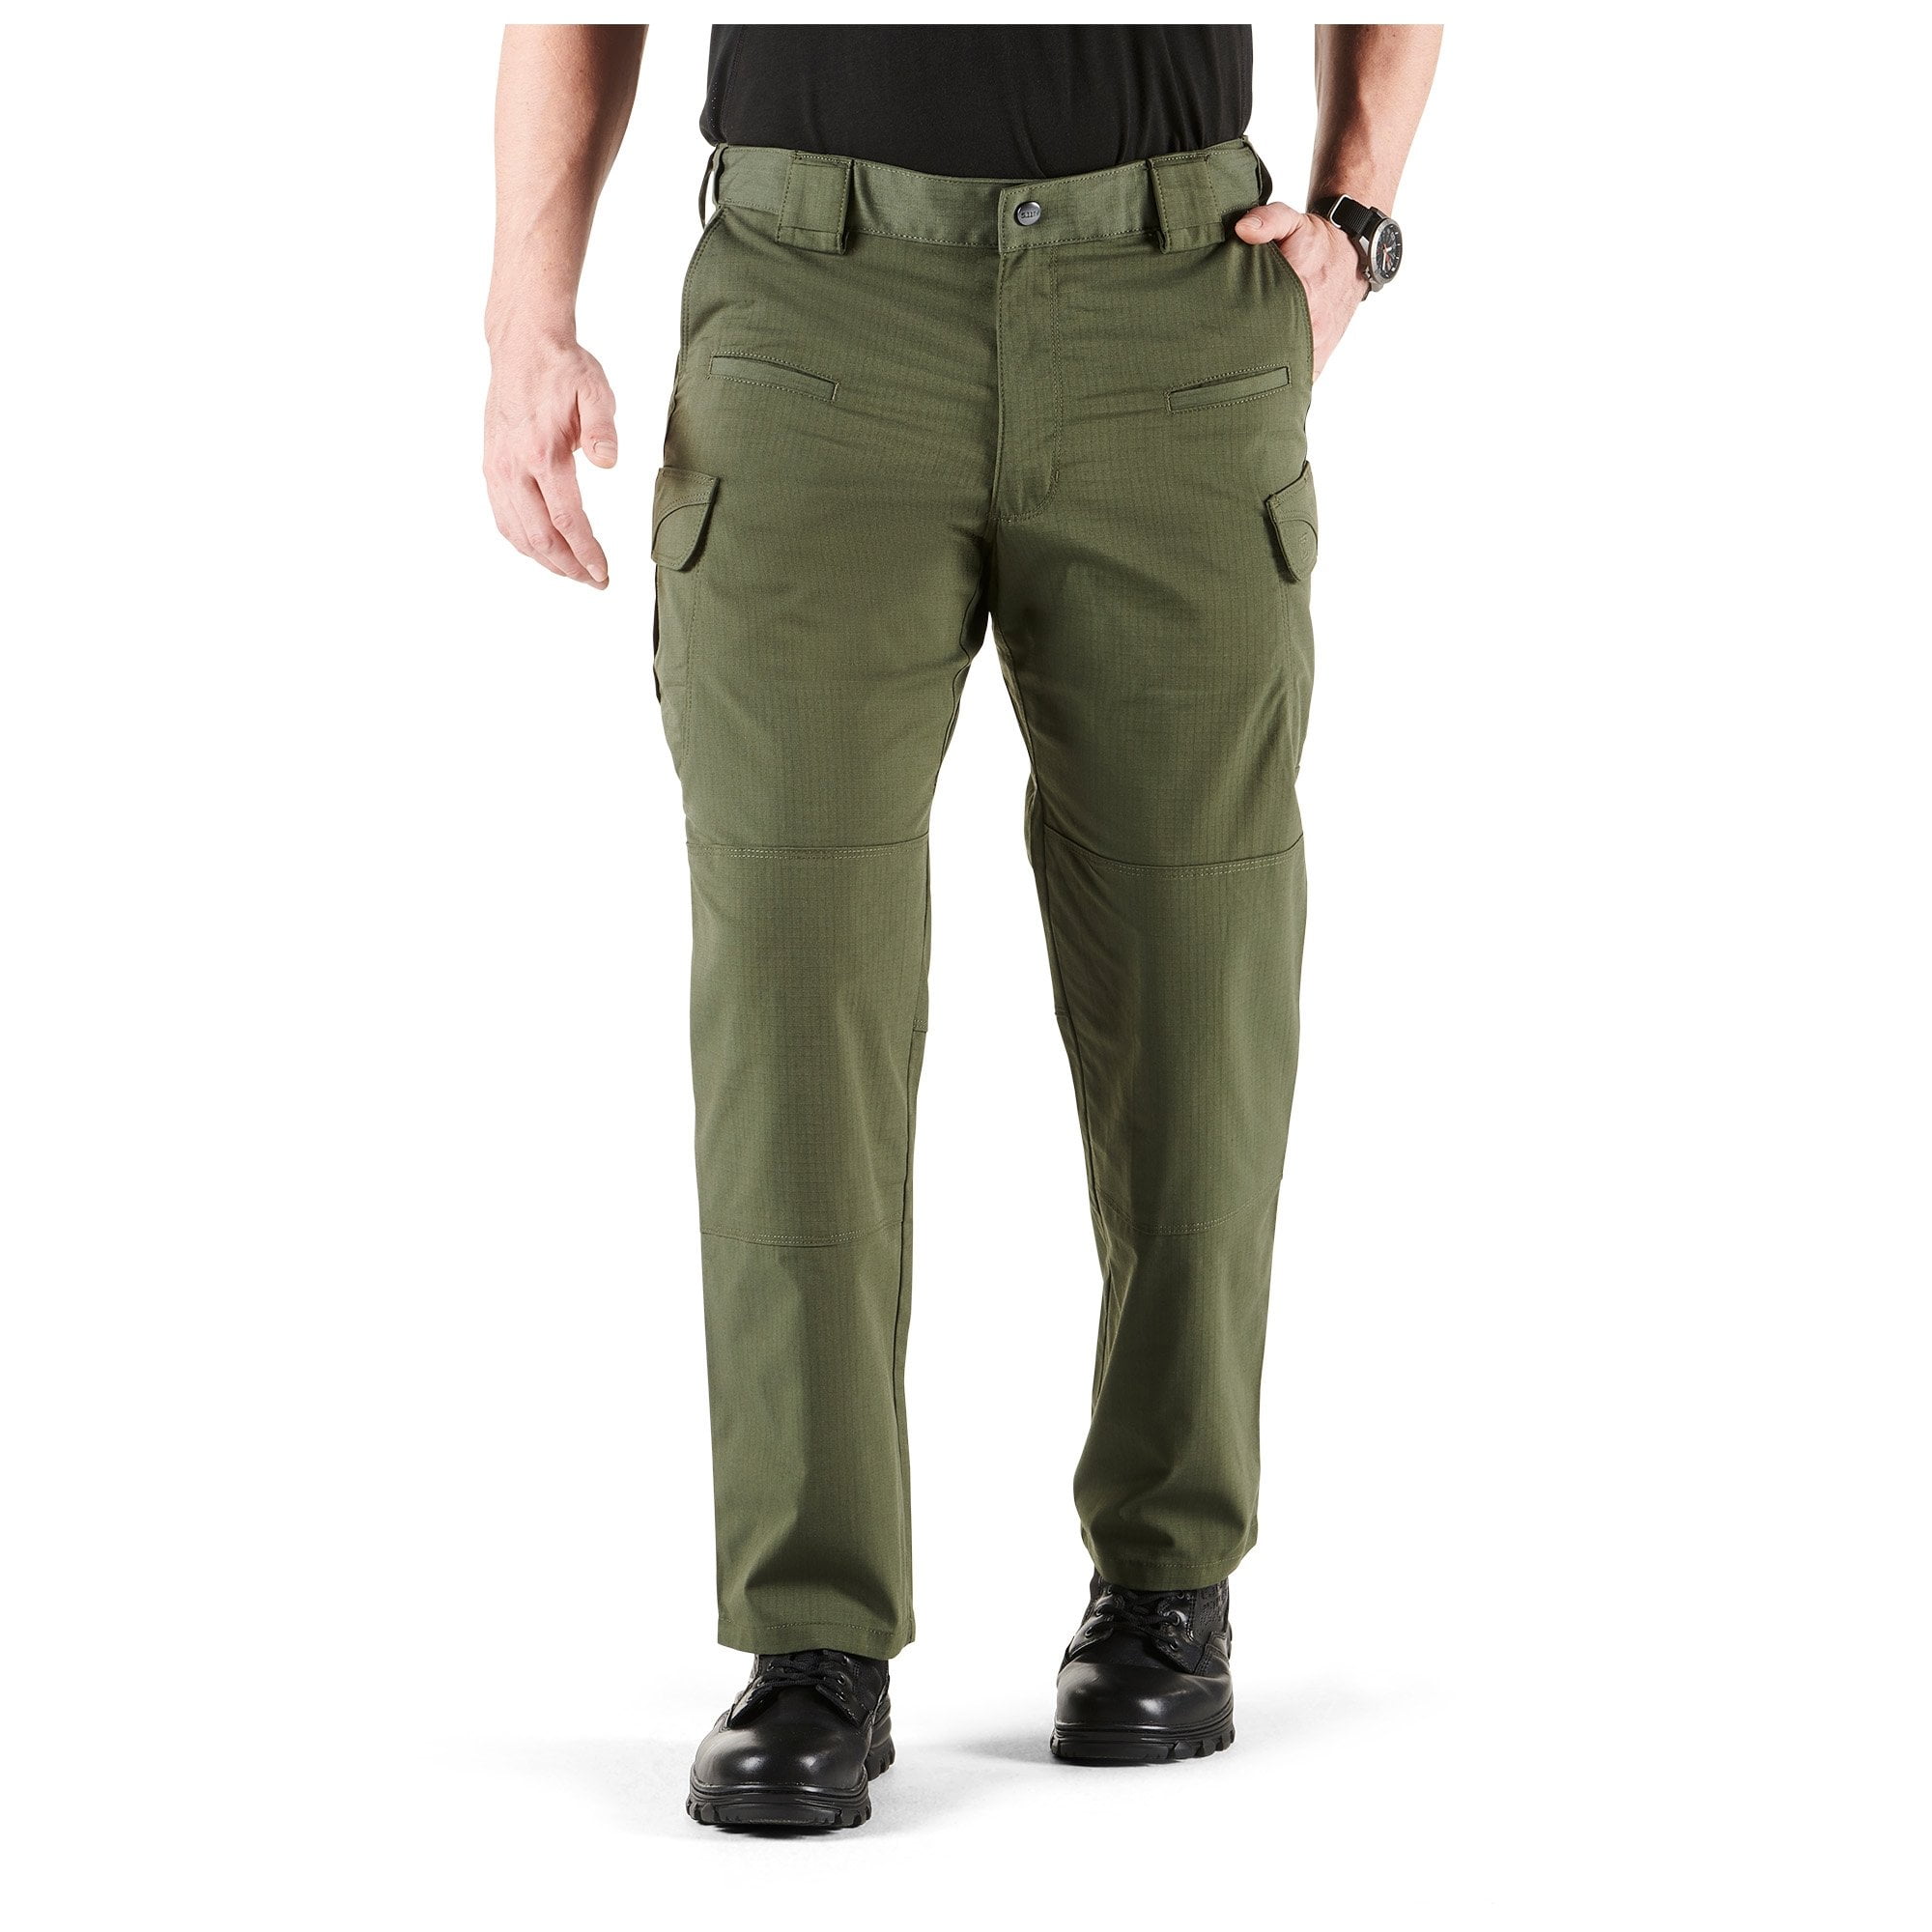 Medium Regular Details about   TDU Ripstop Pants TDU Khaki 